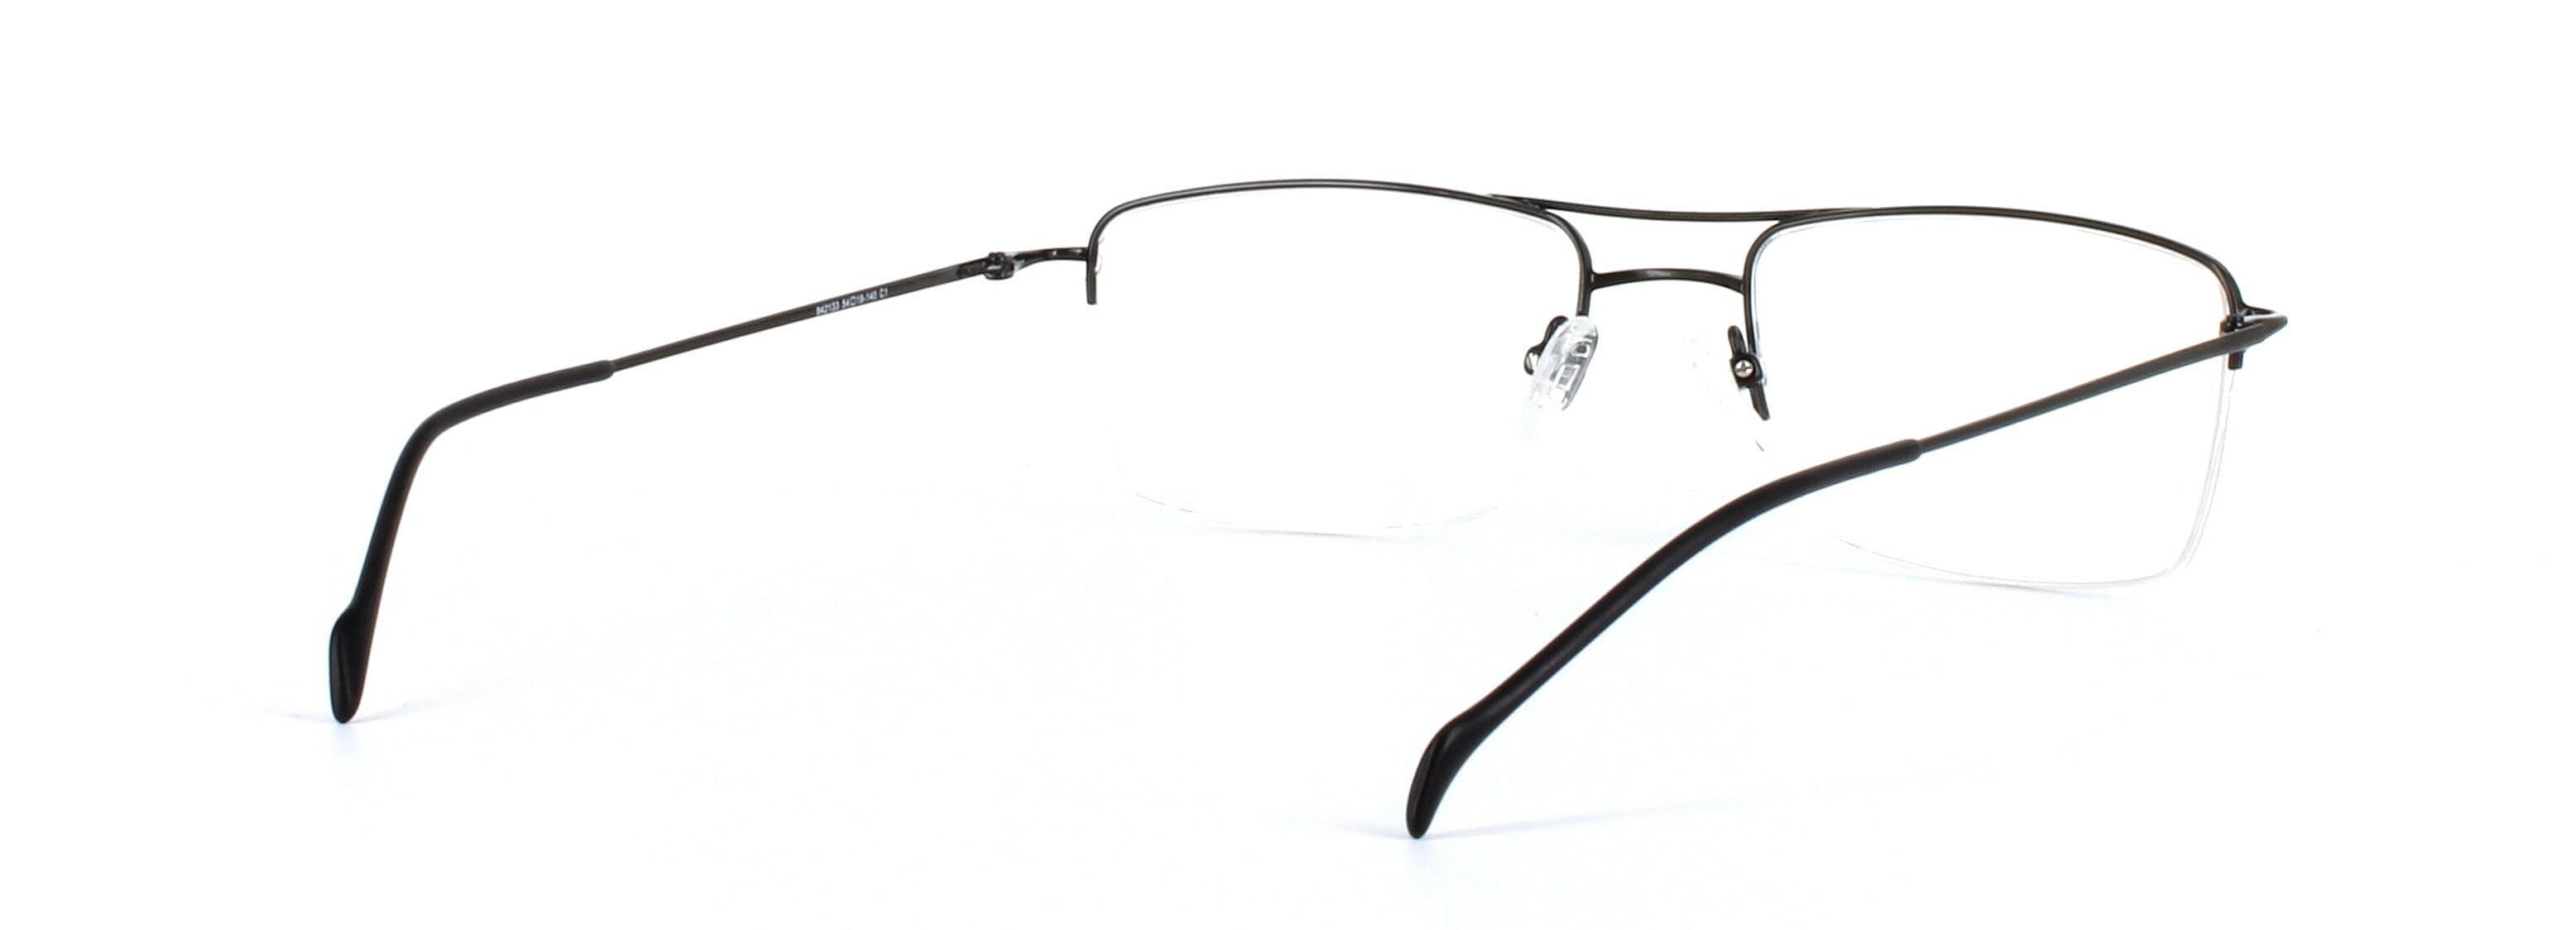 Oklahoma Black Semi Rimless Metal Glasses - Image View 4